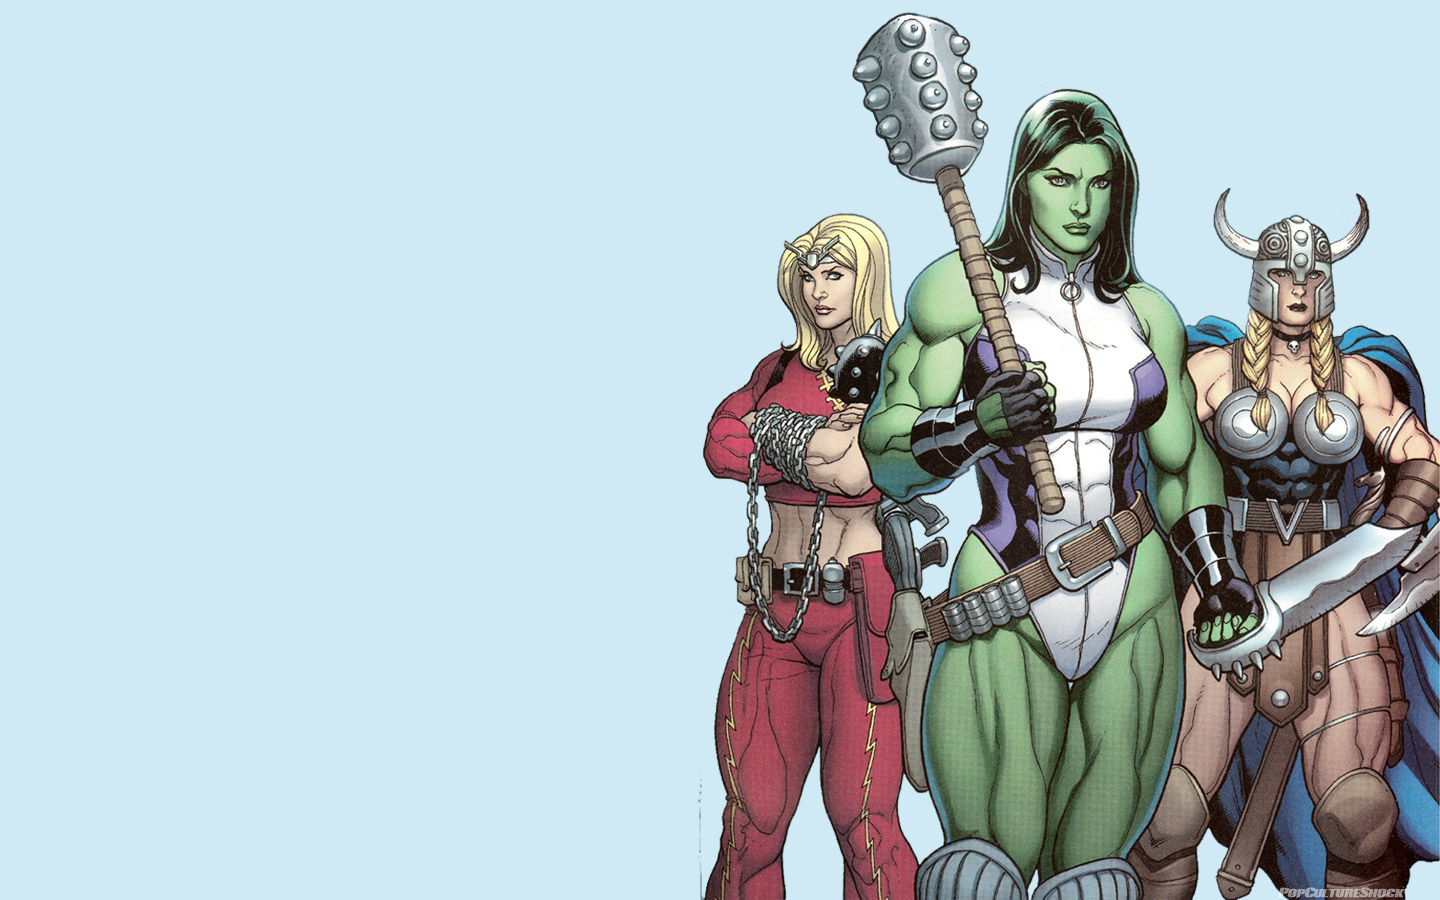 Descarga gratuita de fondo de pantalla para móvil de Historietas, Ella Hulk, Señorita Hulk.